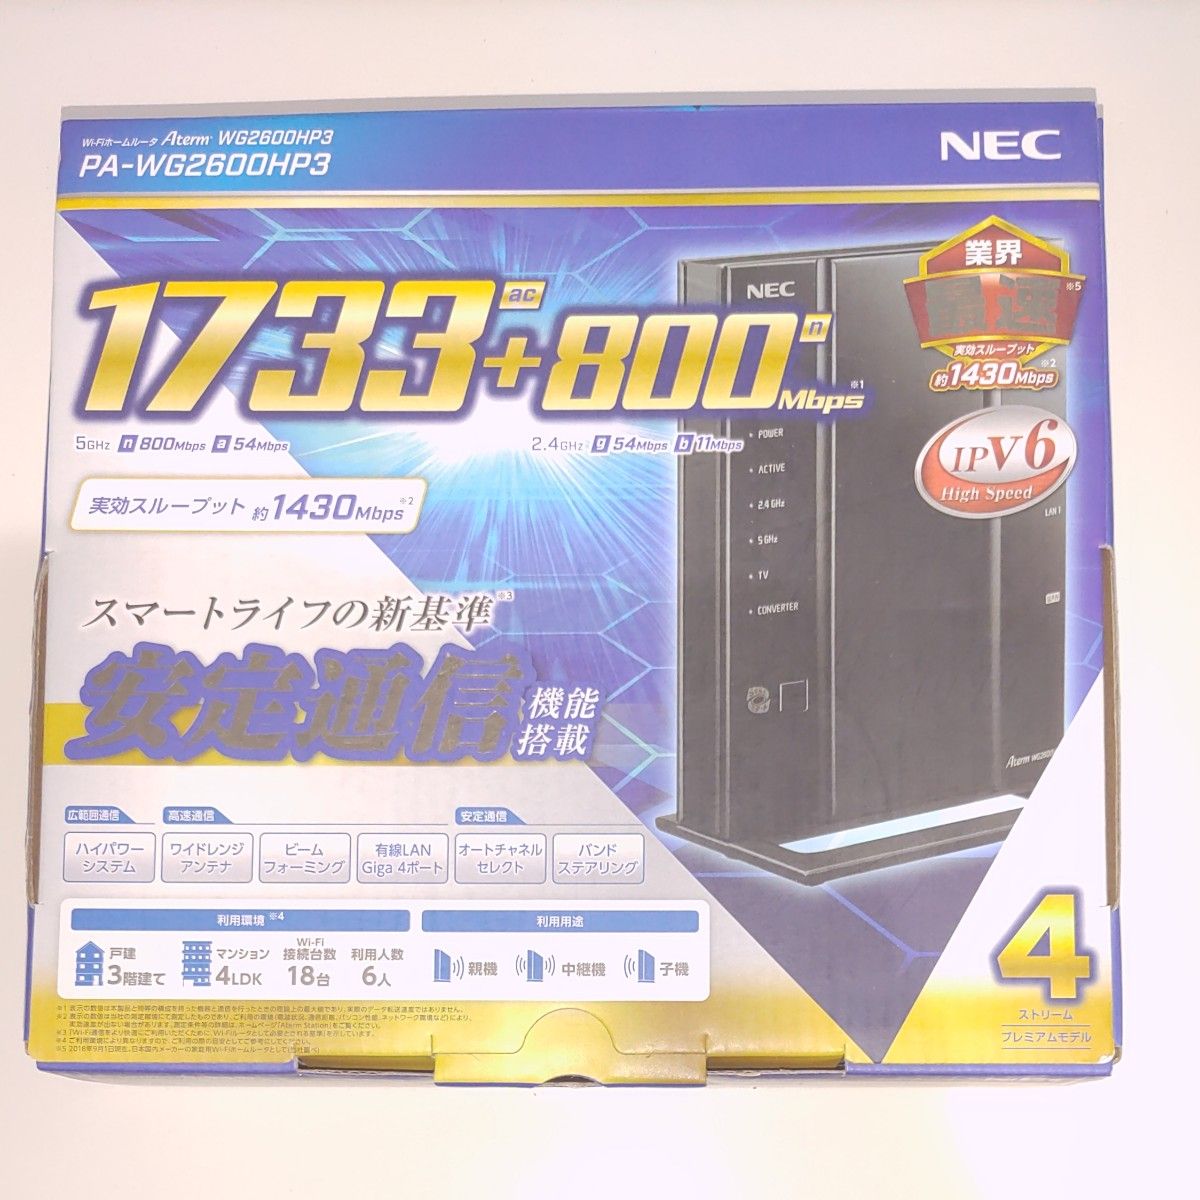 NEC Aterm WG2600HP3 PA-WG2600HP3 無線LANルーター